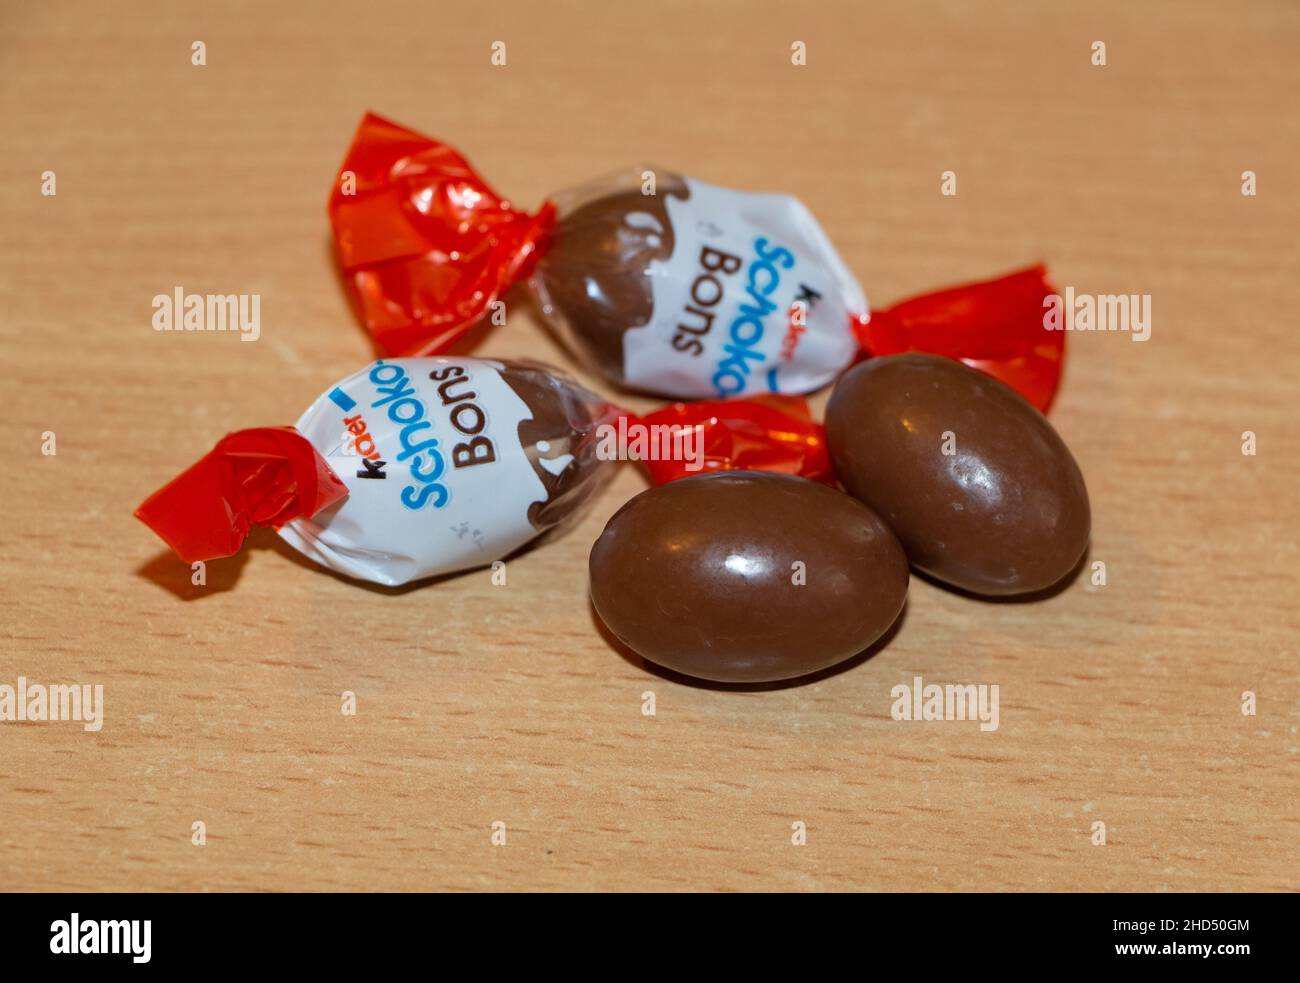 Primelin - France, January 05, 2019 : Schoko-bons chocolates from